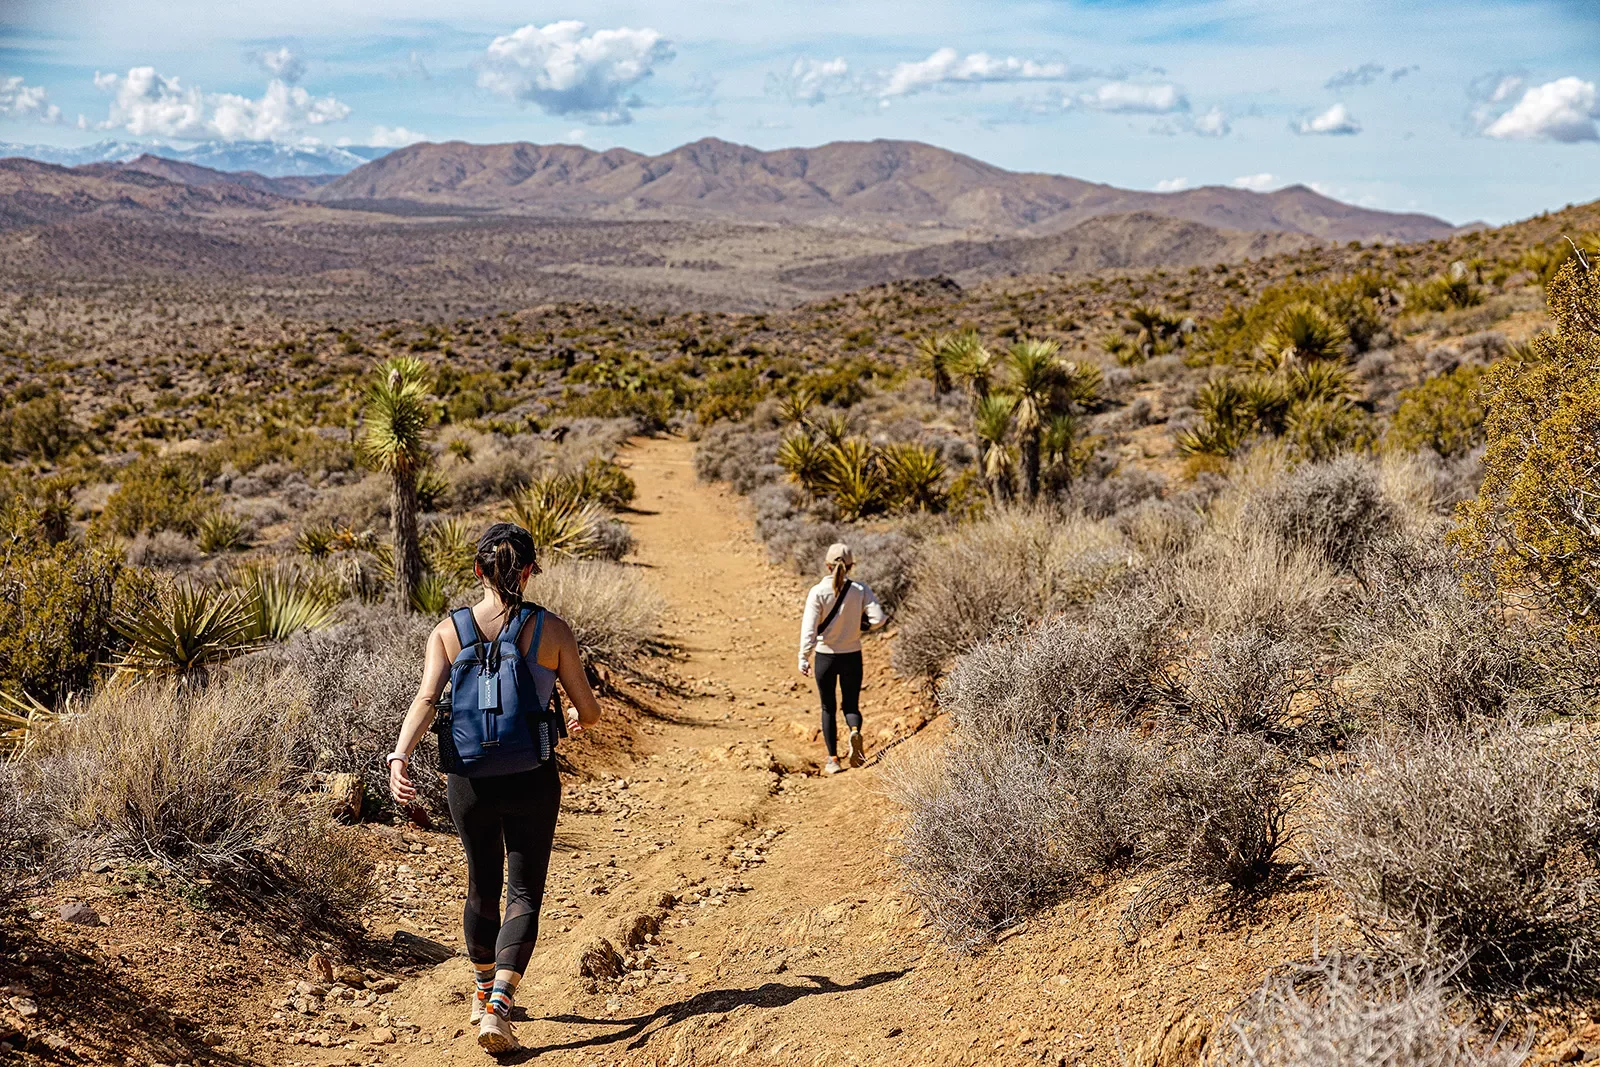 Two guests hiking on desert trail, vast desert landscape all around.